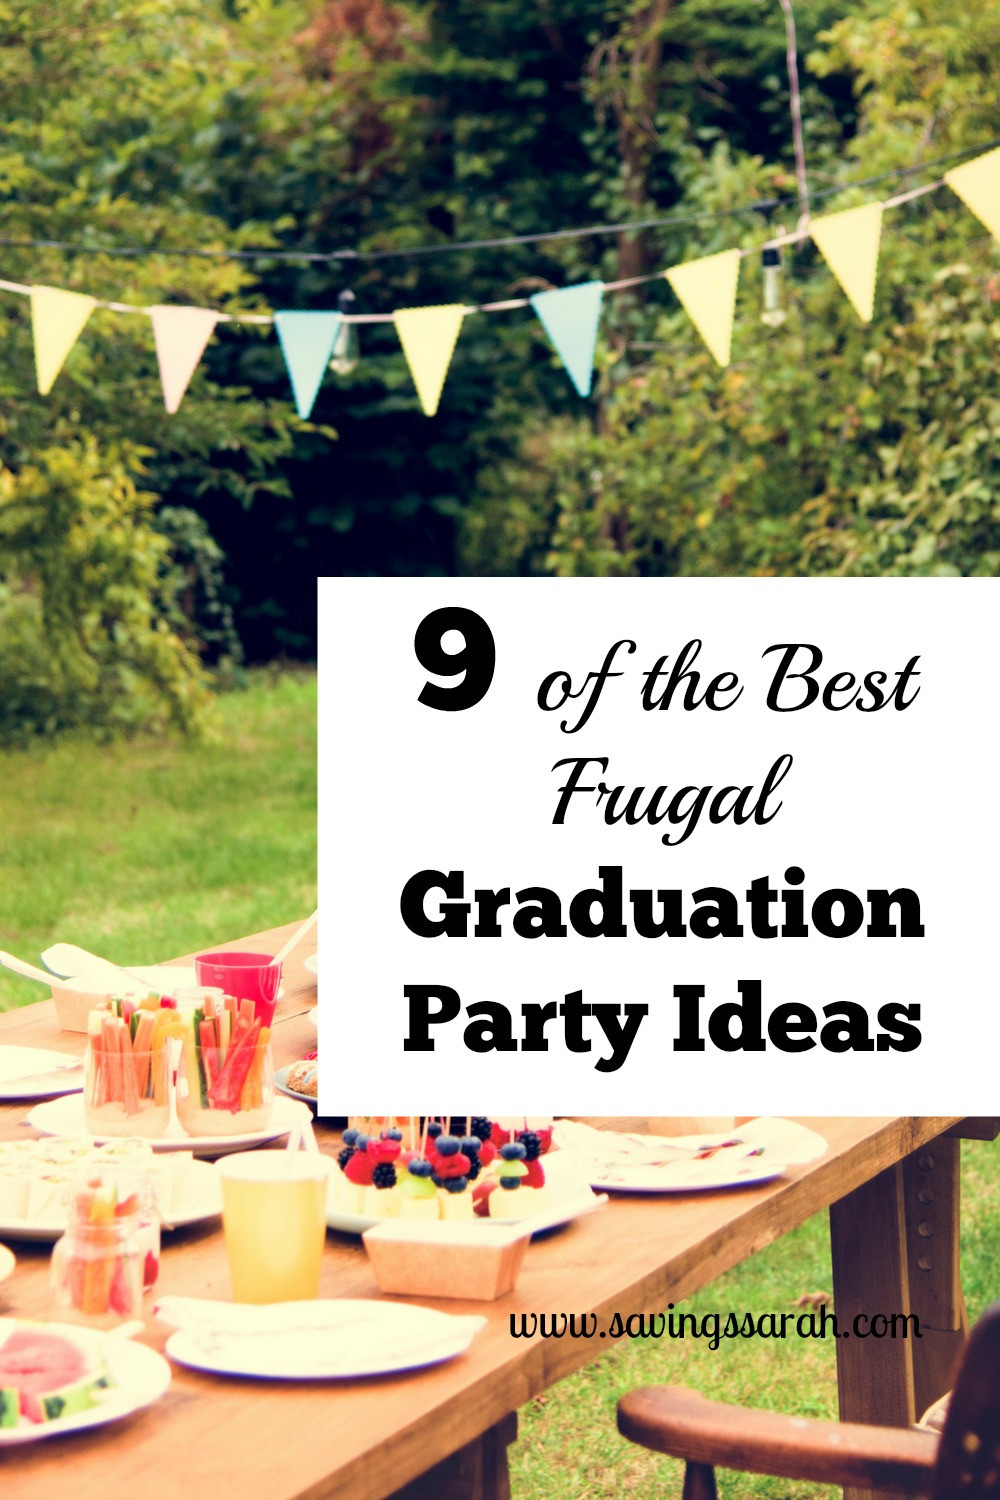 Graduation Party Decor Ideas
 9 the Best Frugal Graduation Party Ideas Earning and